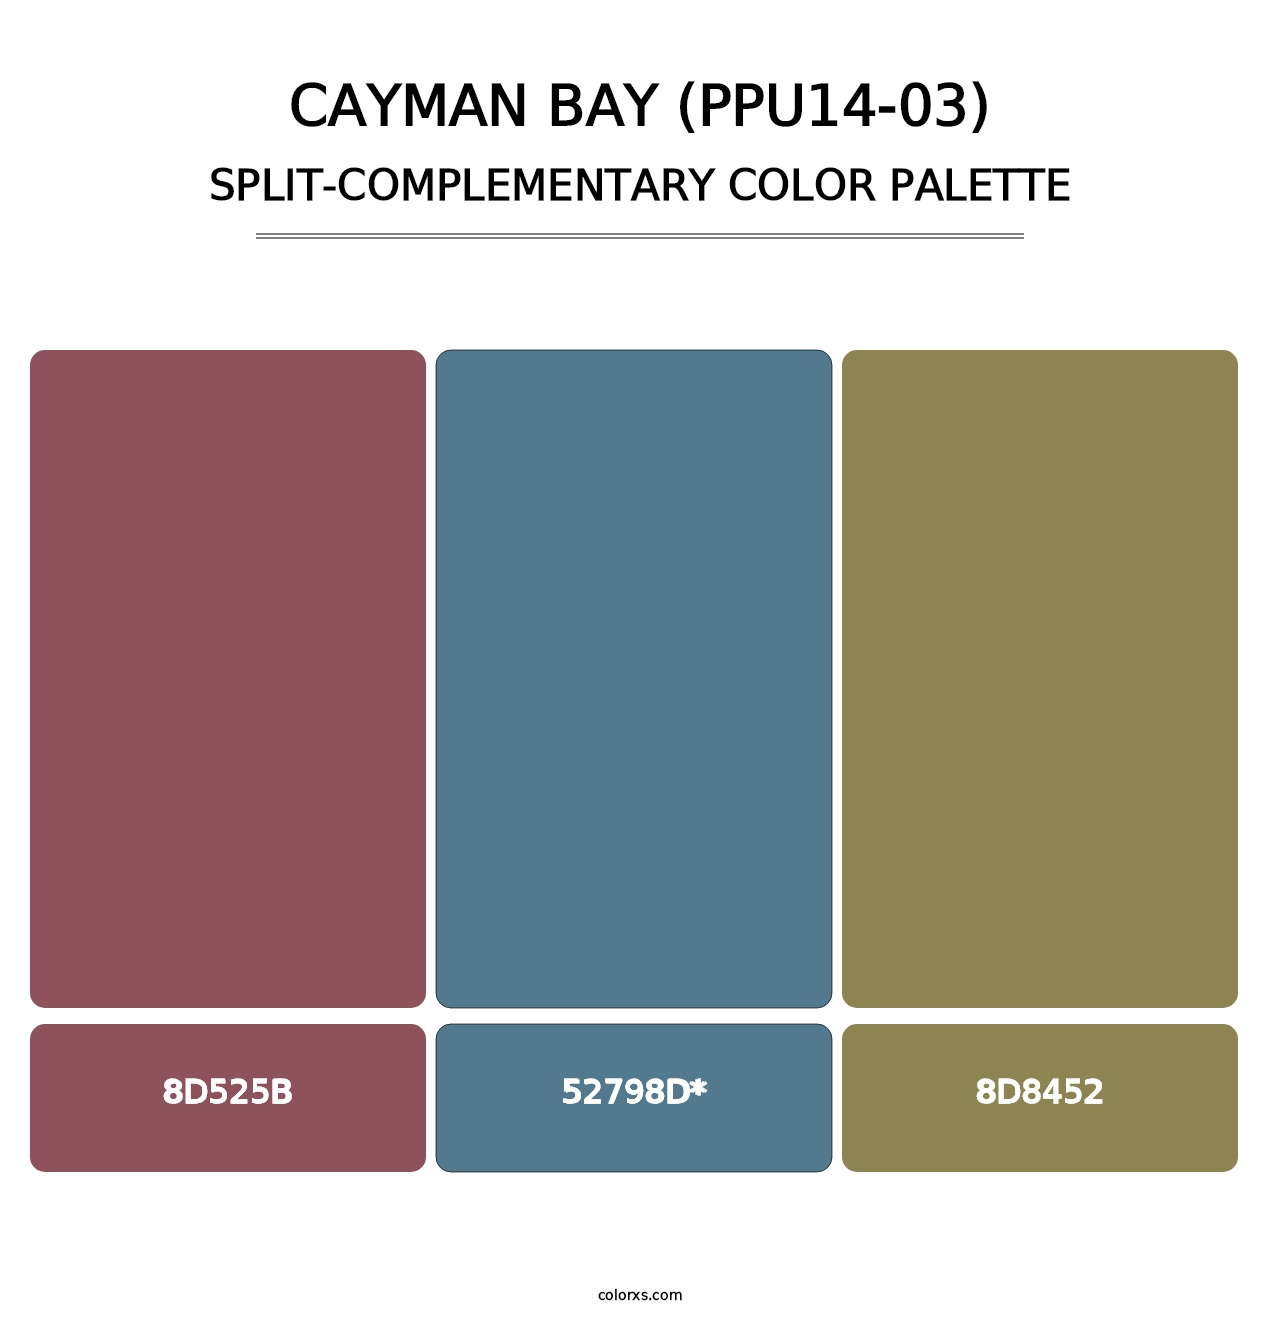 Cayman Bay (PPU14-03) - Split-Complementary Color Palette